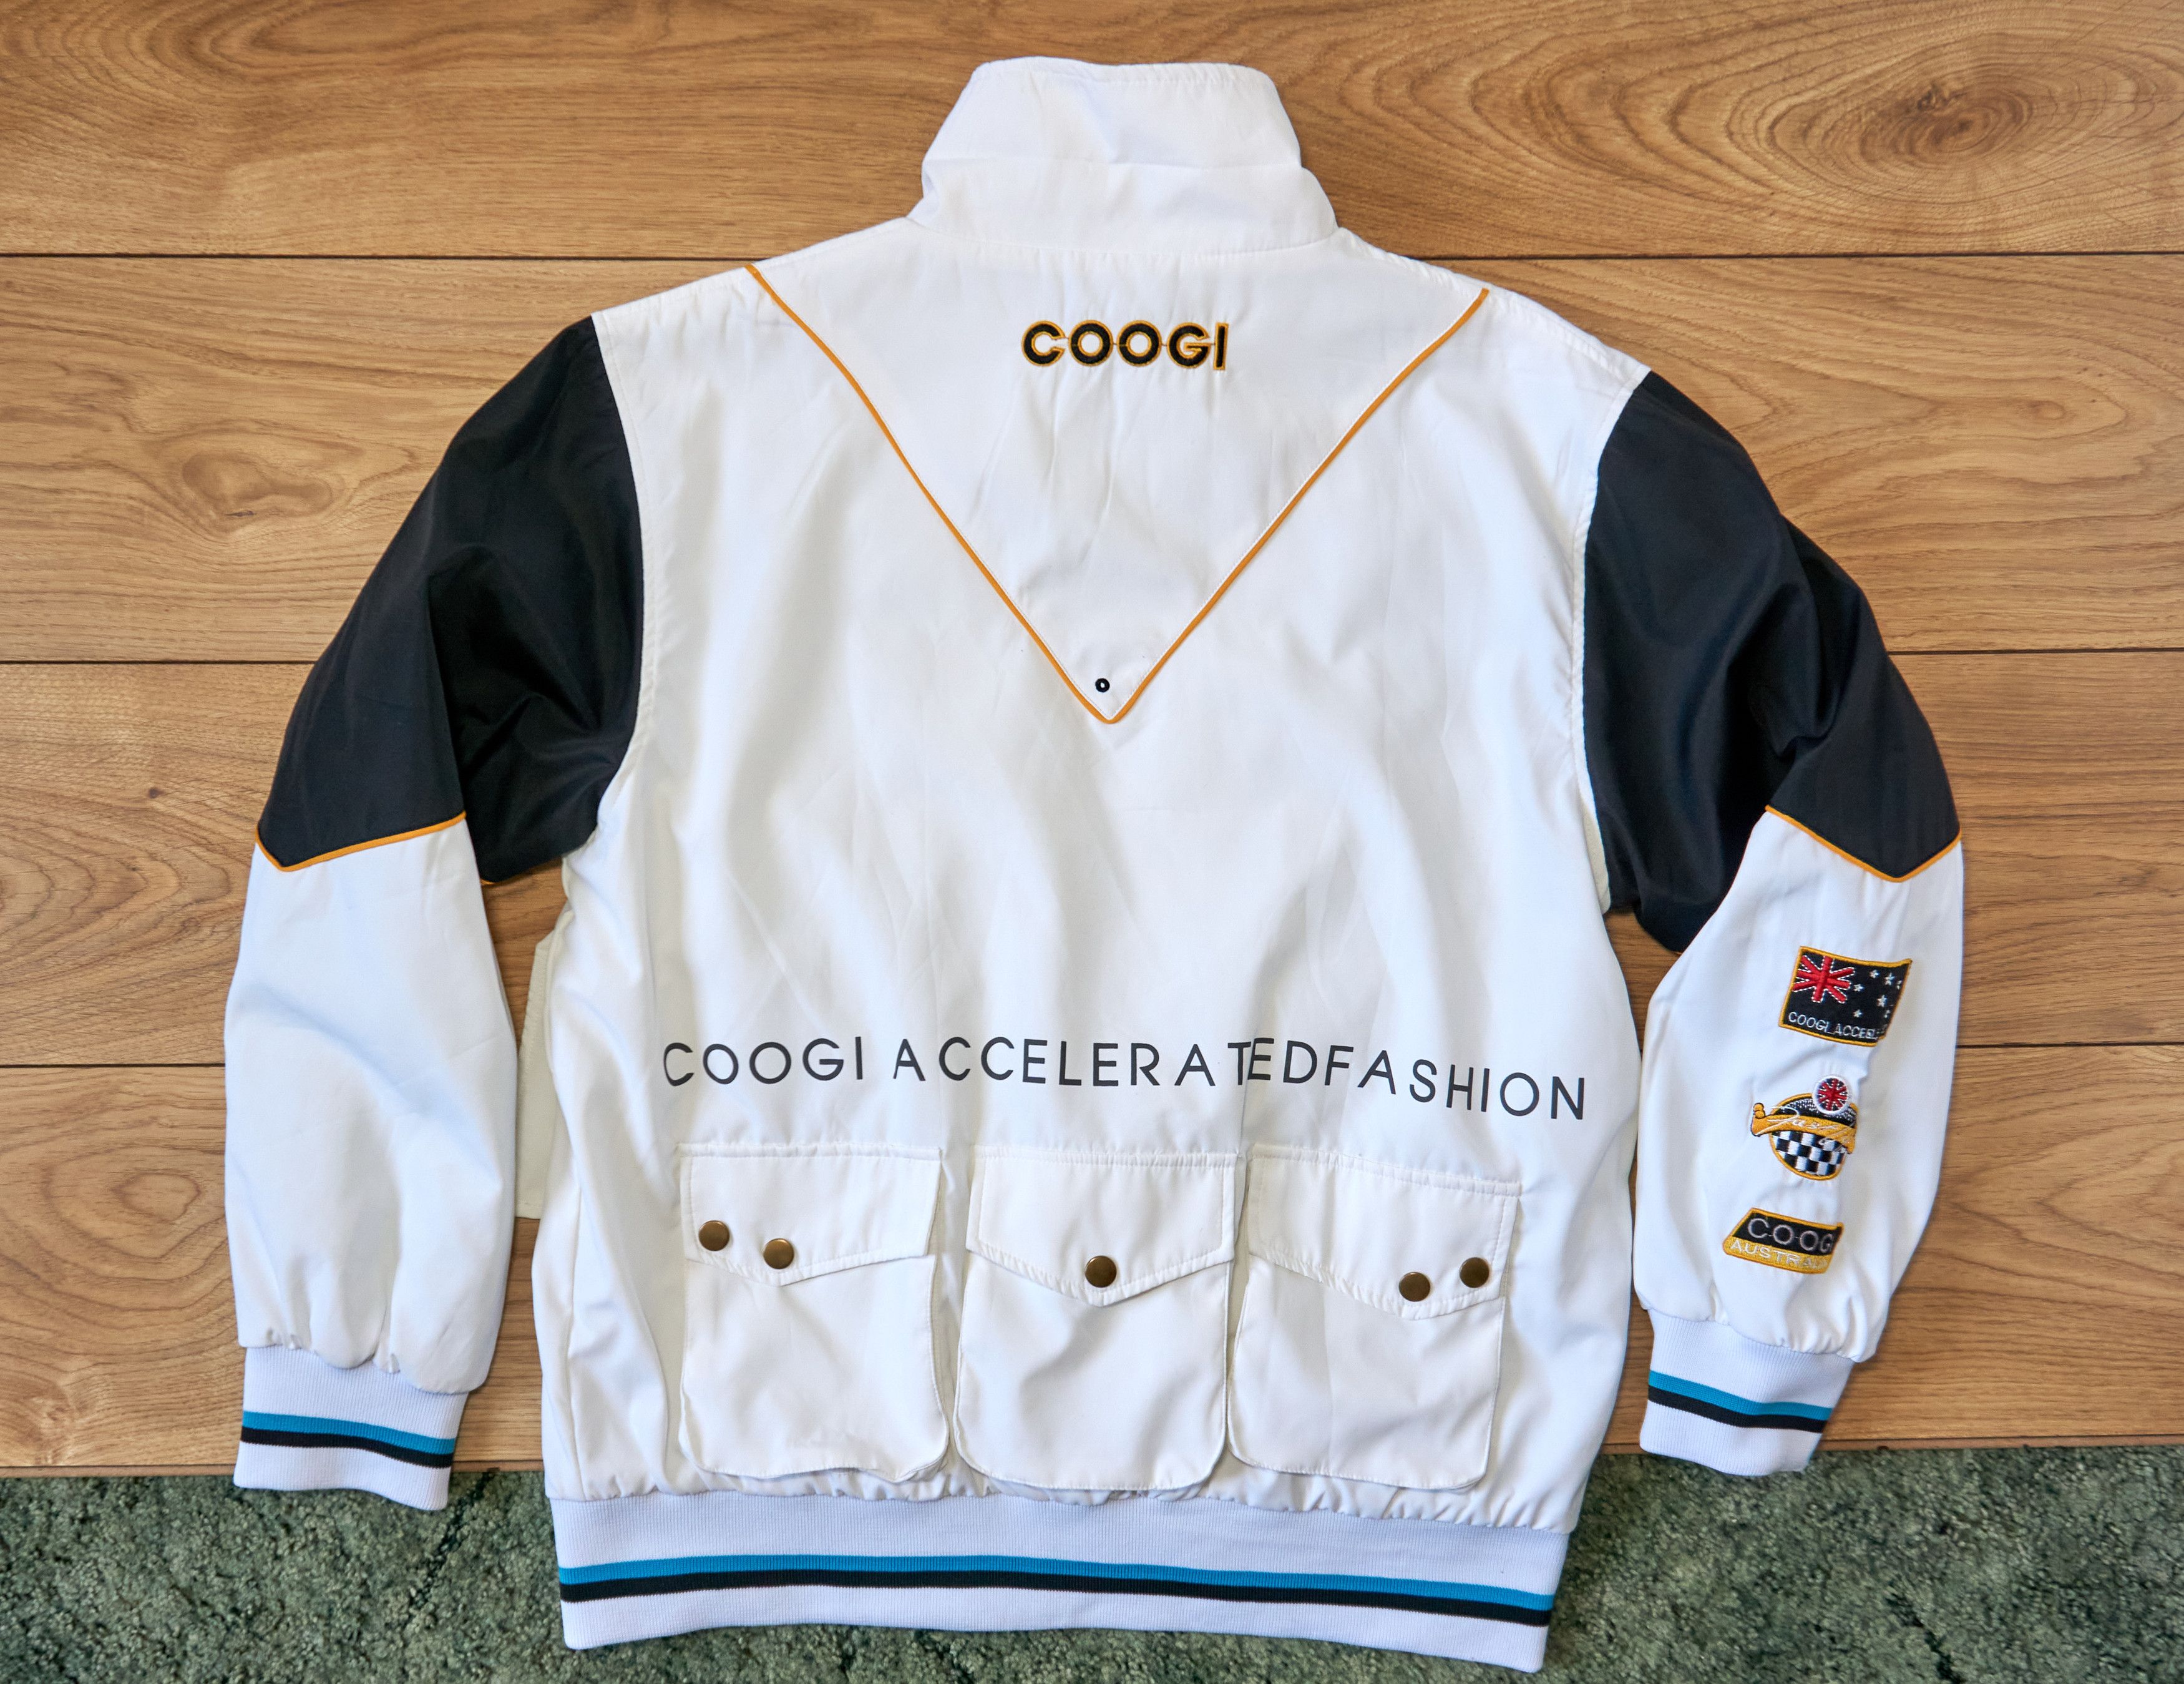 Coogi Coogi AcceleratedFashion, Coogi 69, Fast Life Jacket,Logo Size US S / EU 44-46 / 1 - 2 Preview